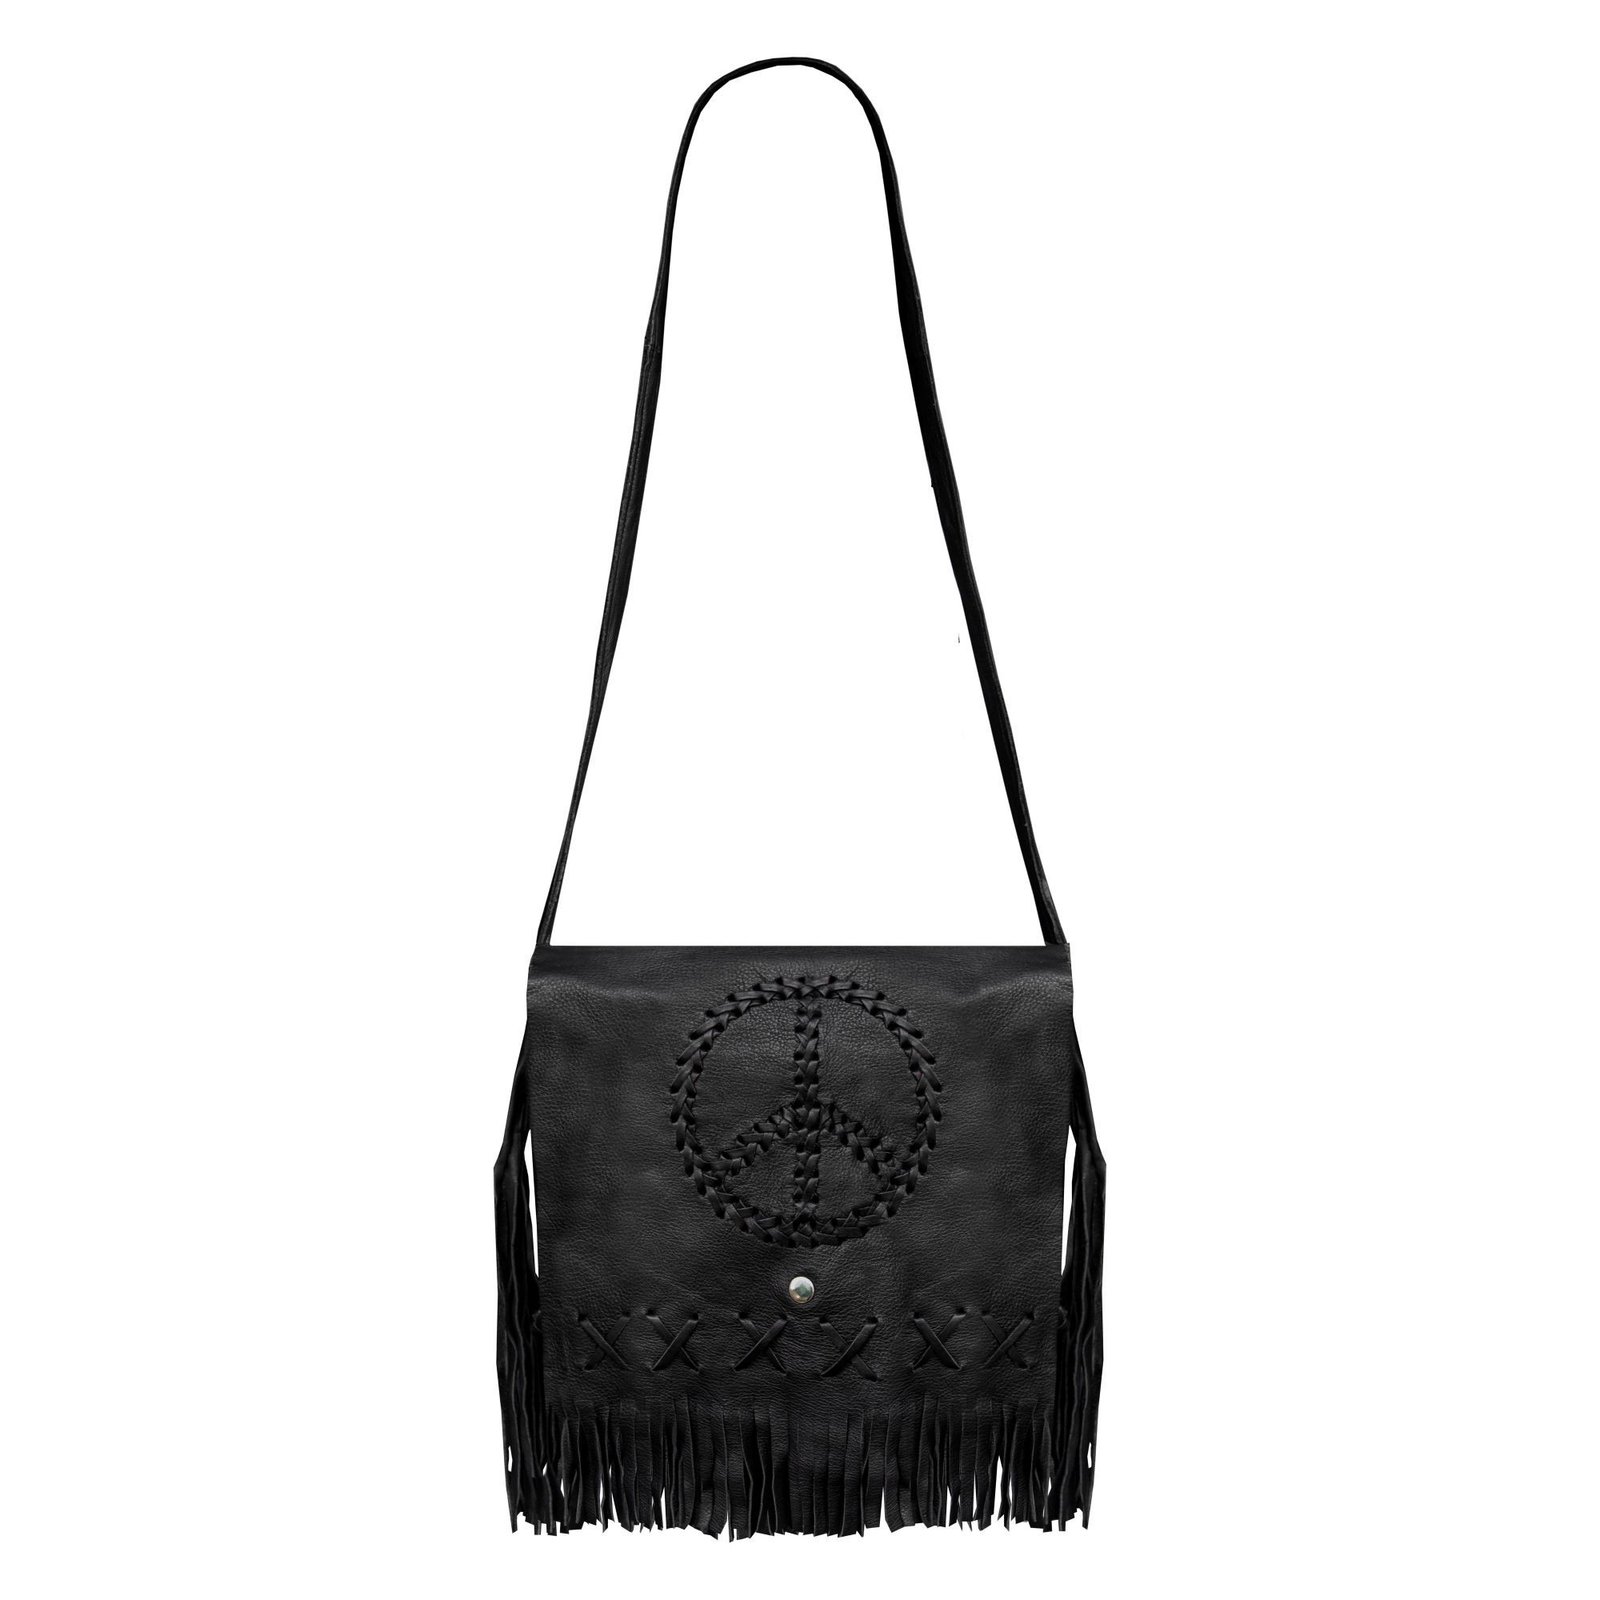 Dark Brown Leather Purse - Peace Sign - Fringe - Handbag - AC2050-11-DL